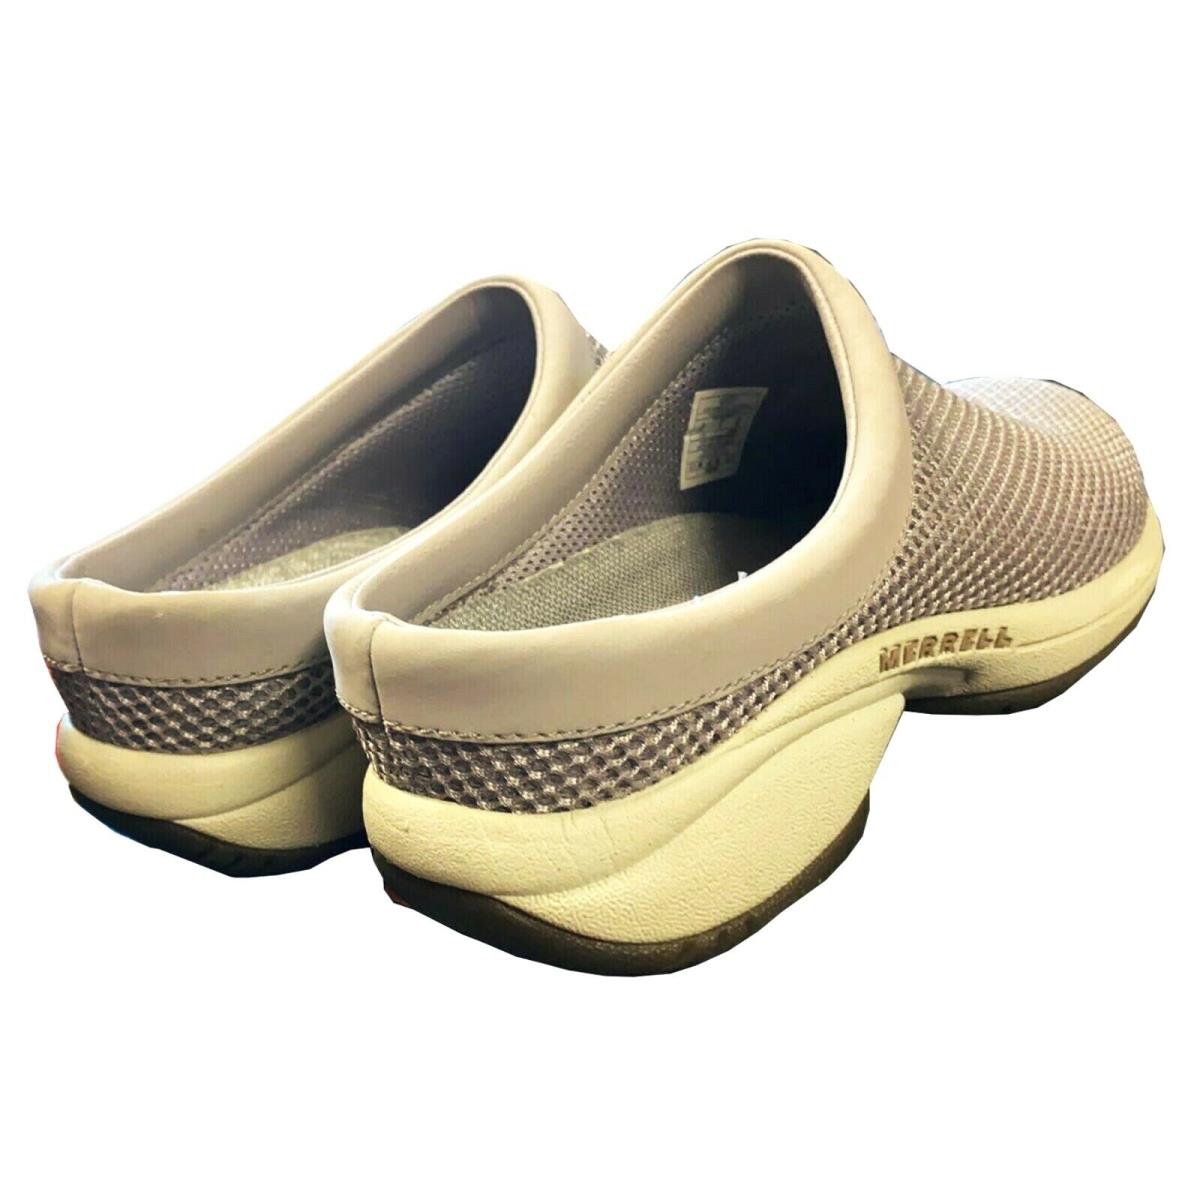 Merrell shoes Breeze - Lavander 0